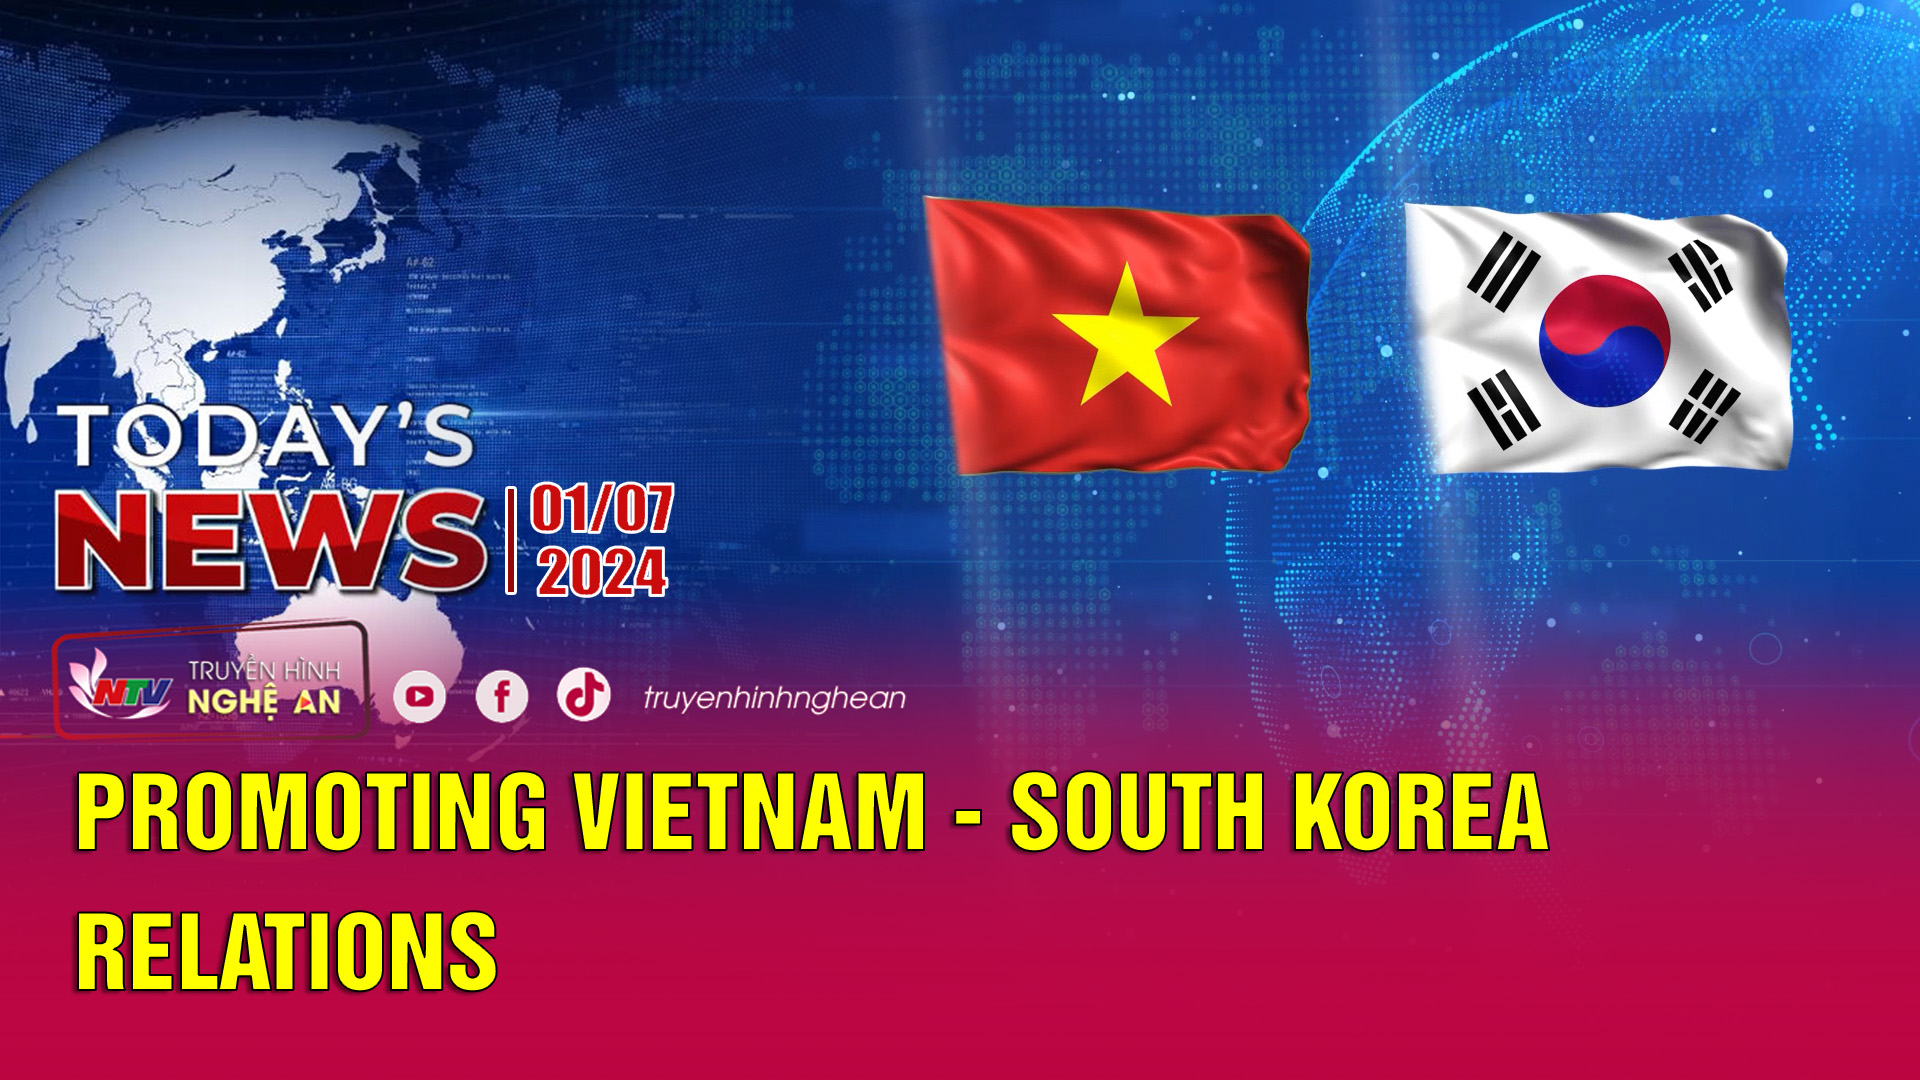 Today's News 01/07/2024: Promoting Vietnam - South Korea relations